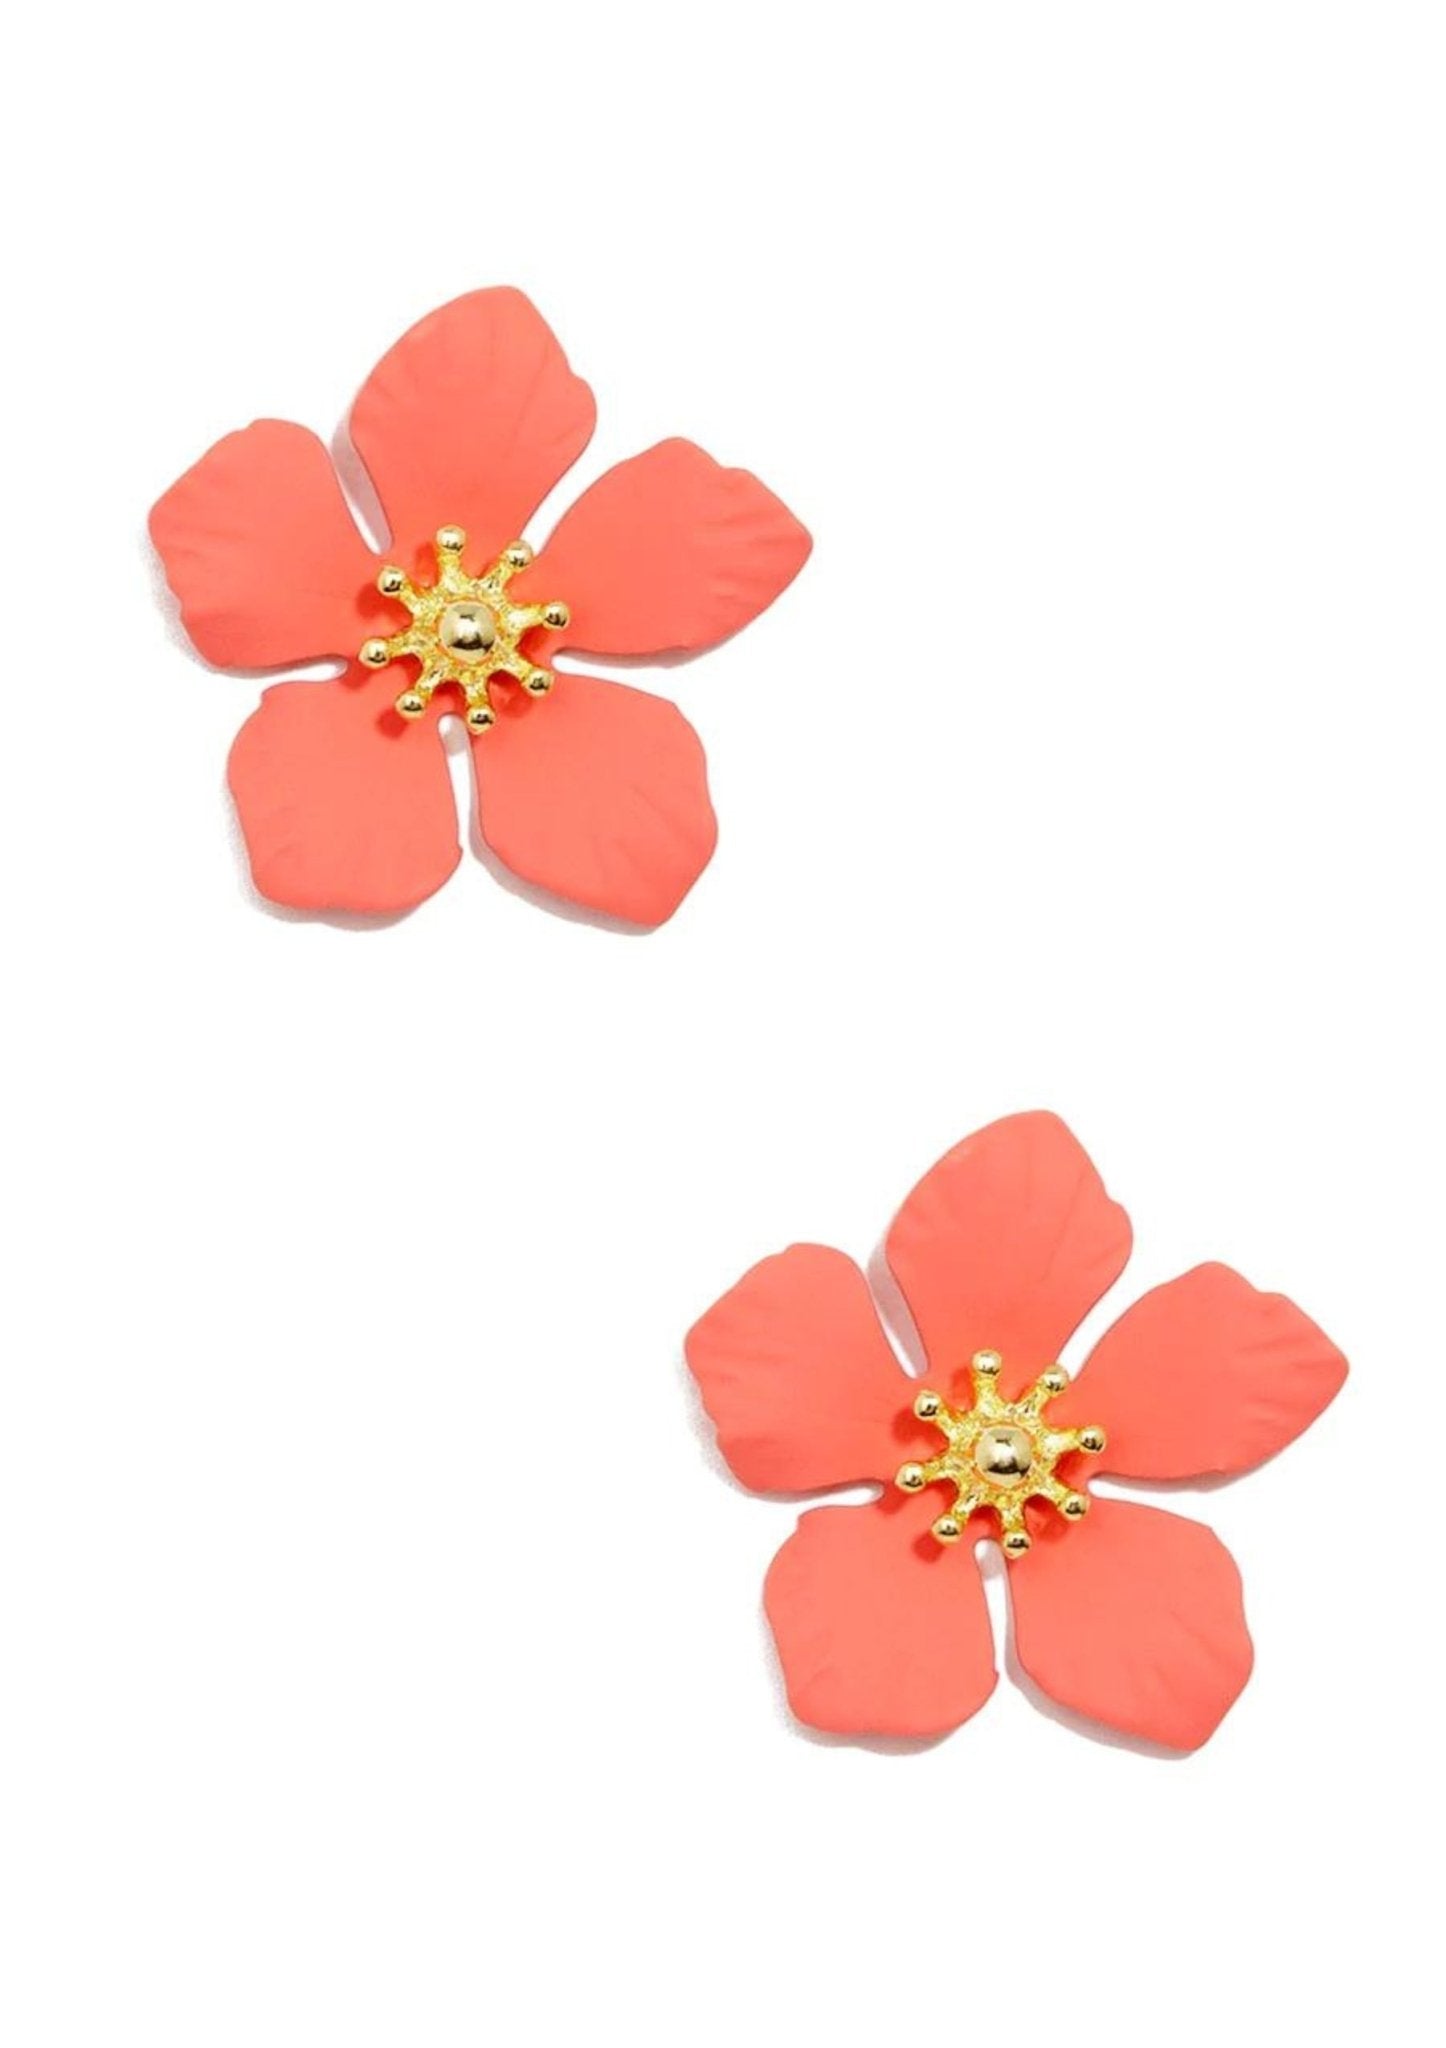 emory-floral-stud-earring-accessories-jewelry-earrings-georgia-kate